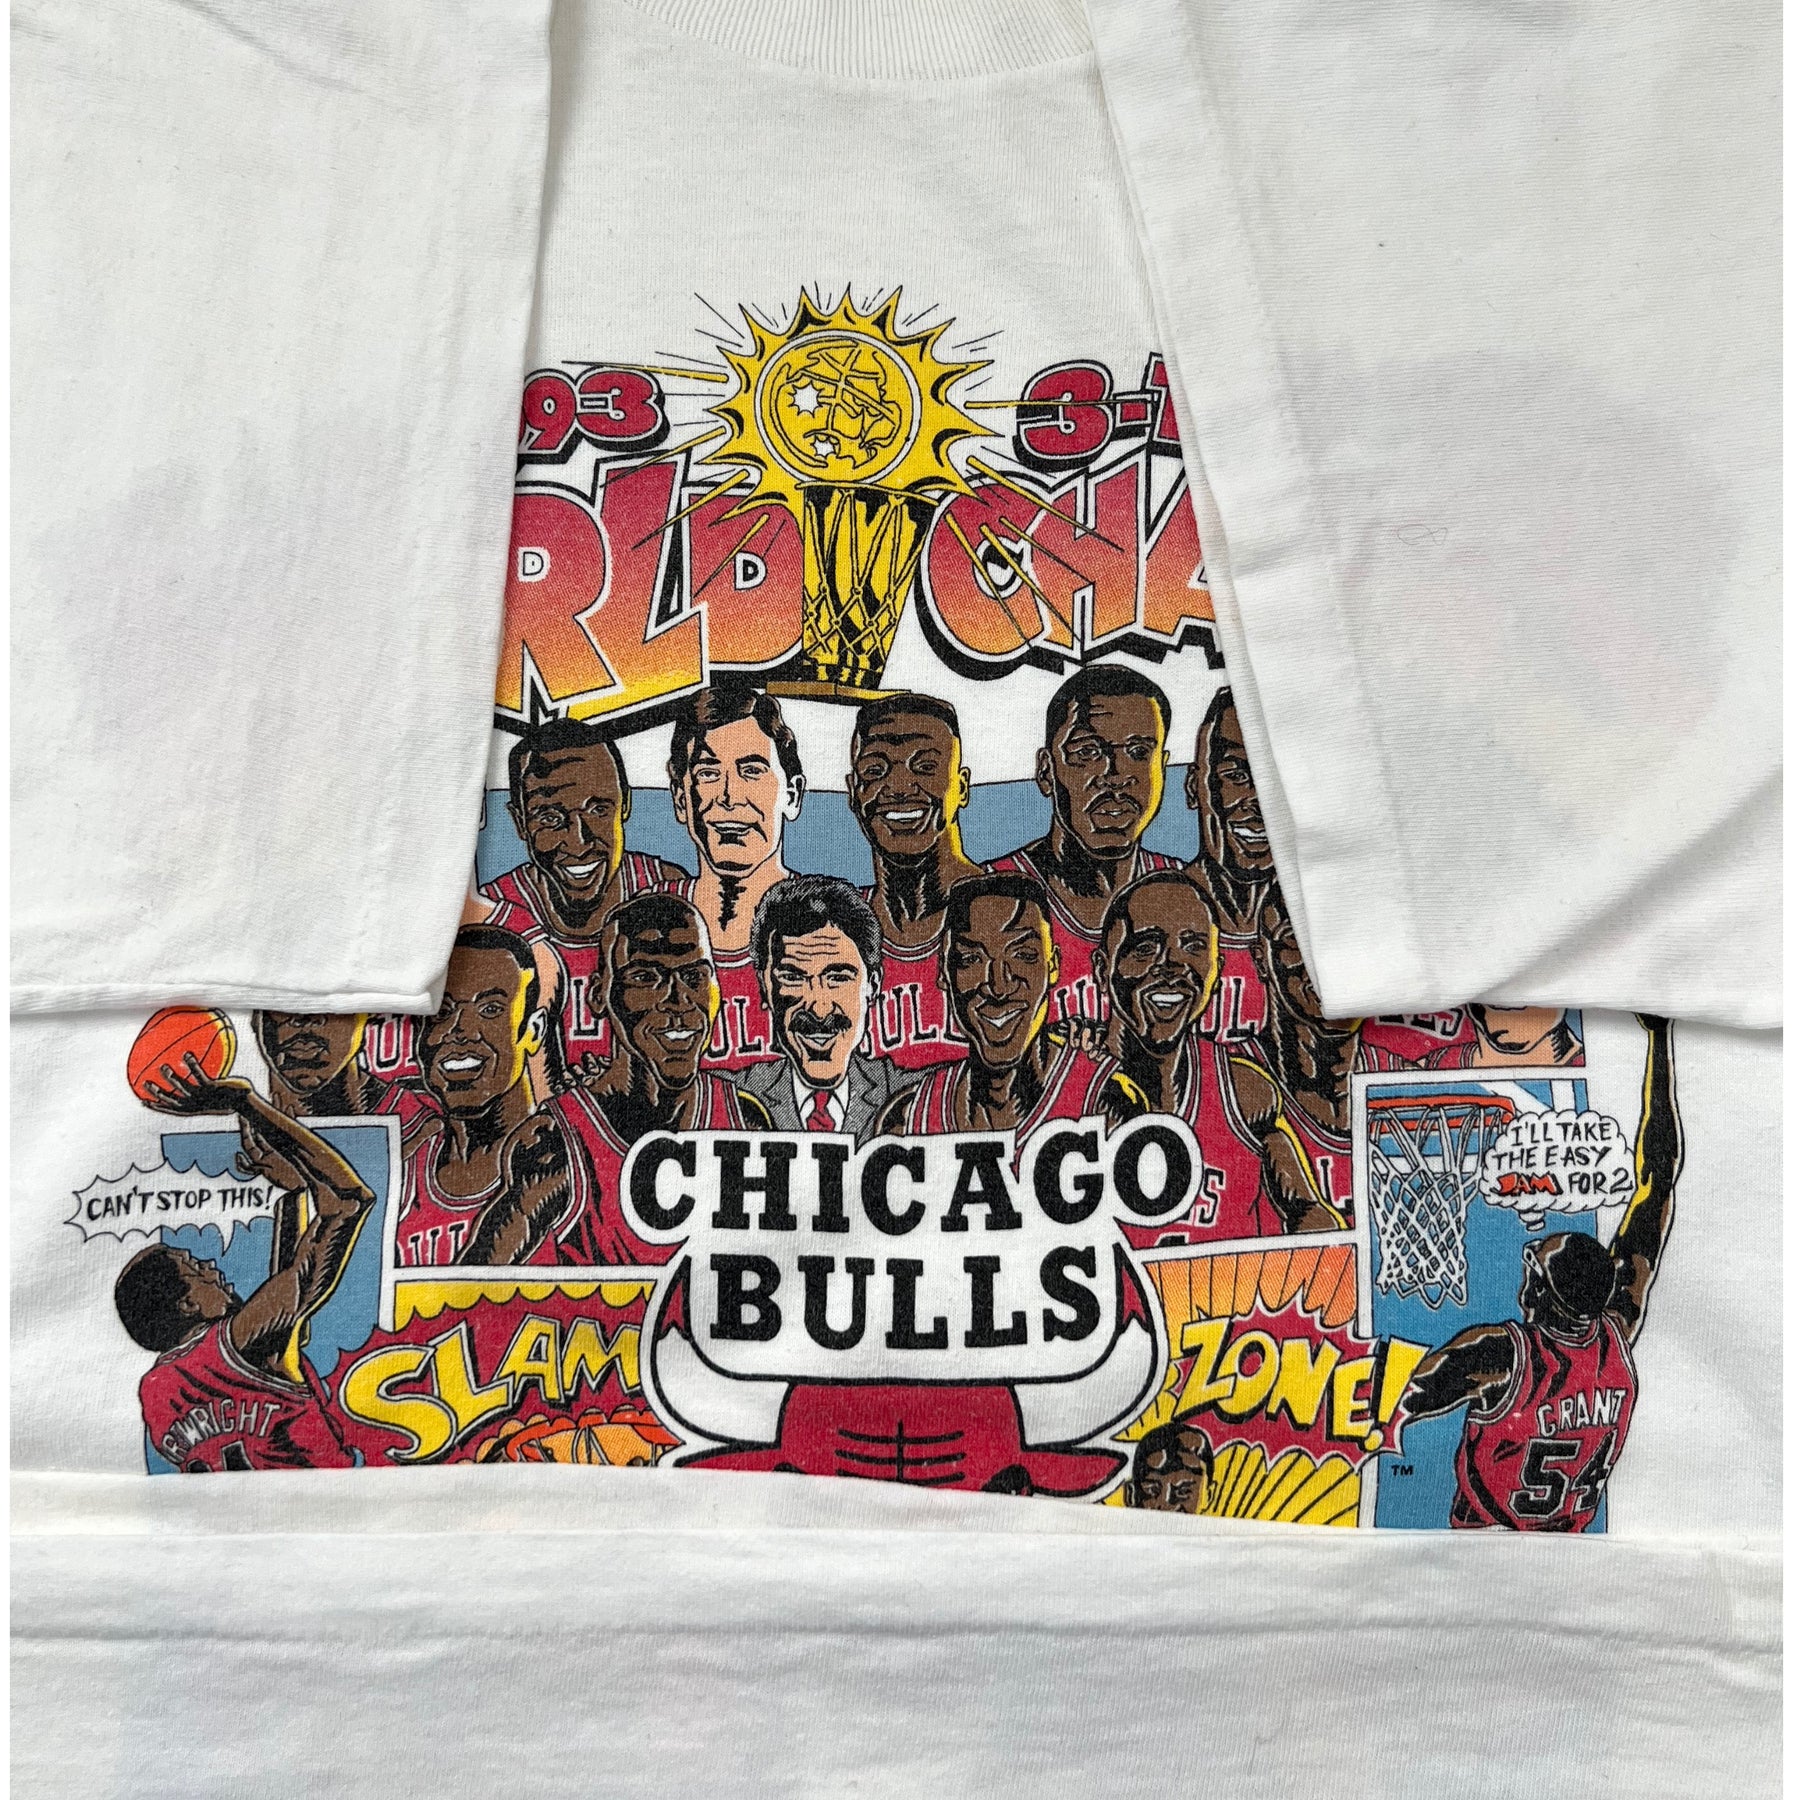 Chicago Bulls Vintage Clothing, Bulls Collection, Bulls Vintage